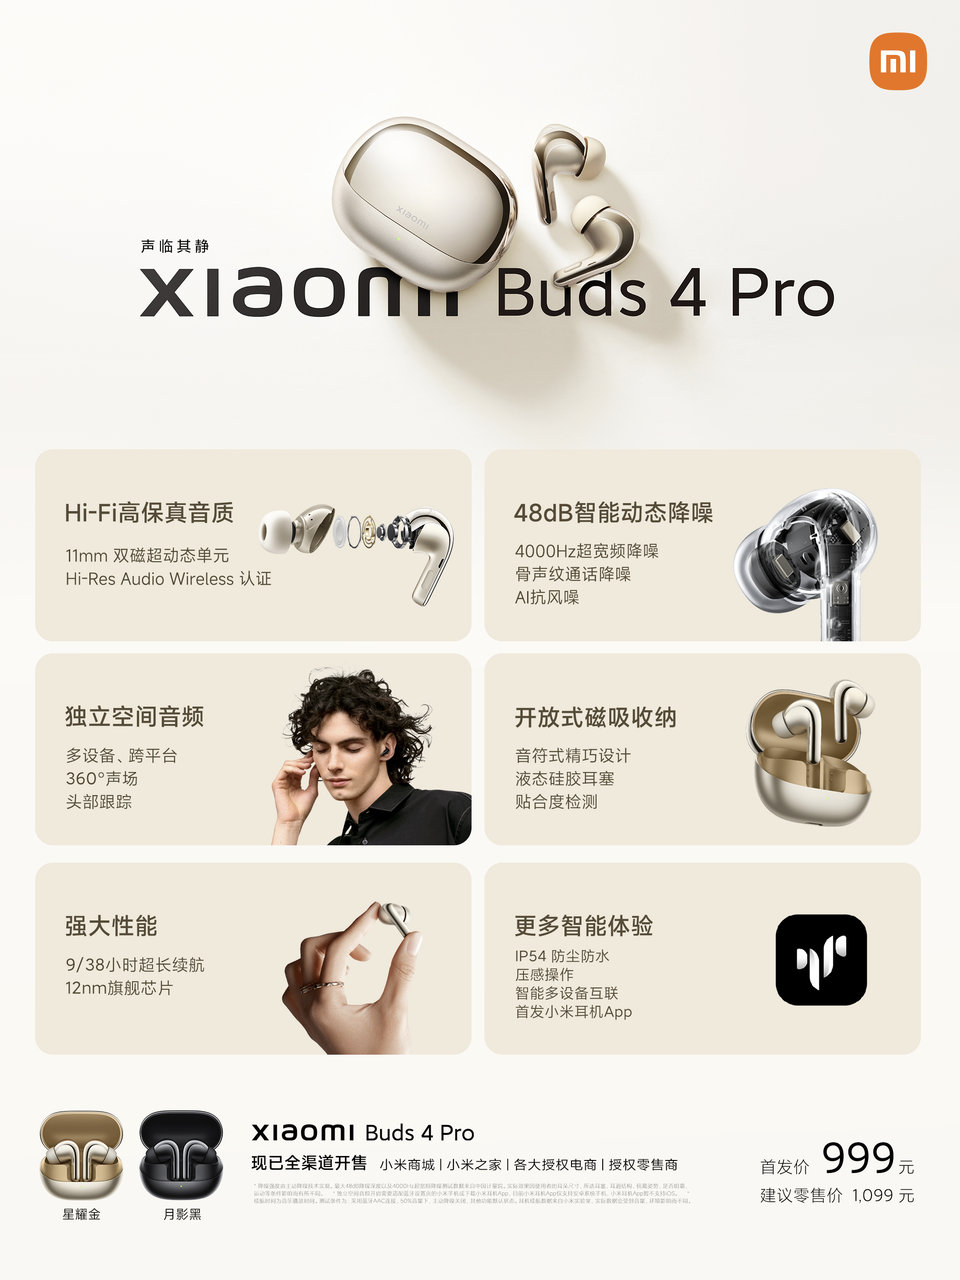 xiaomi buds 4 pro price